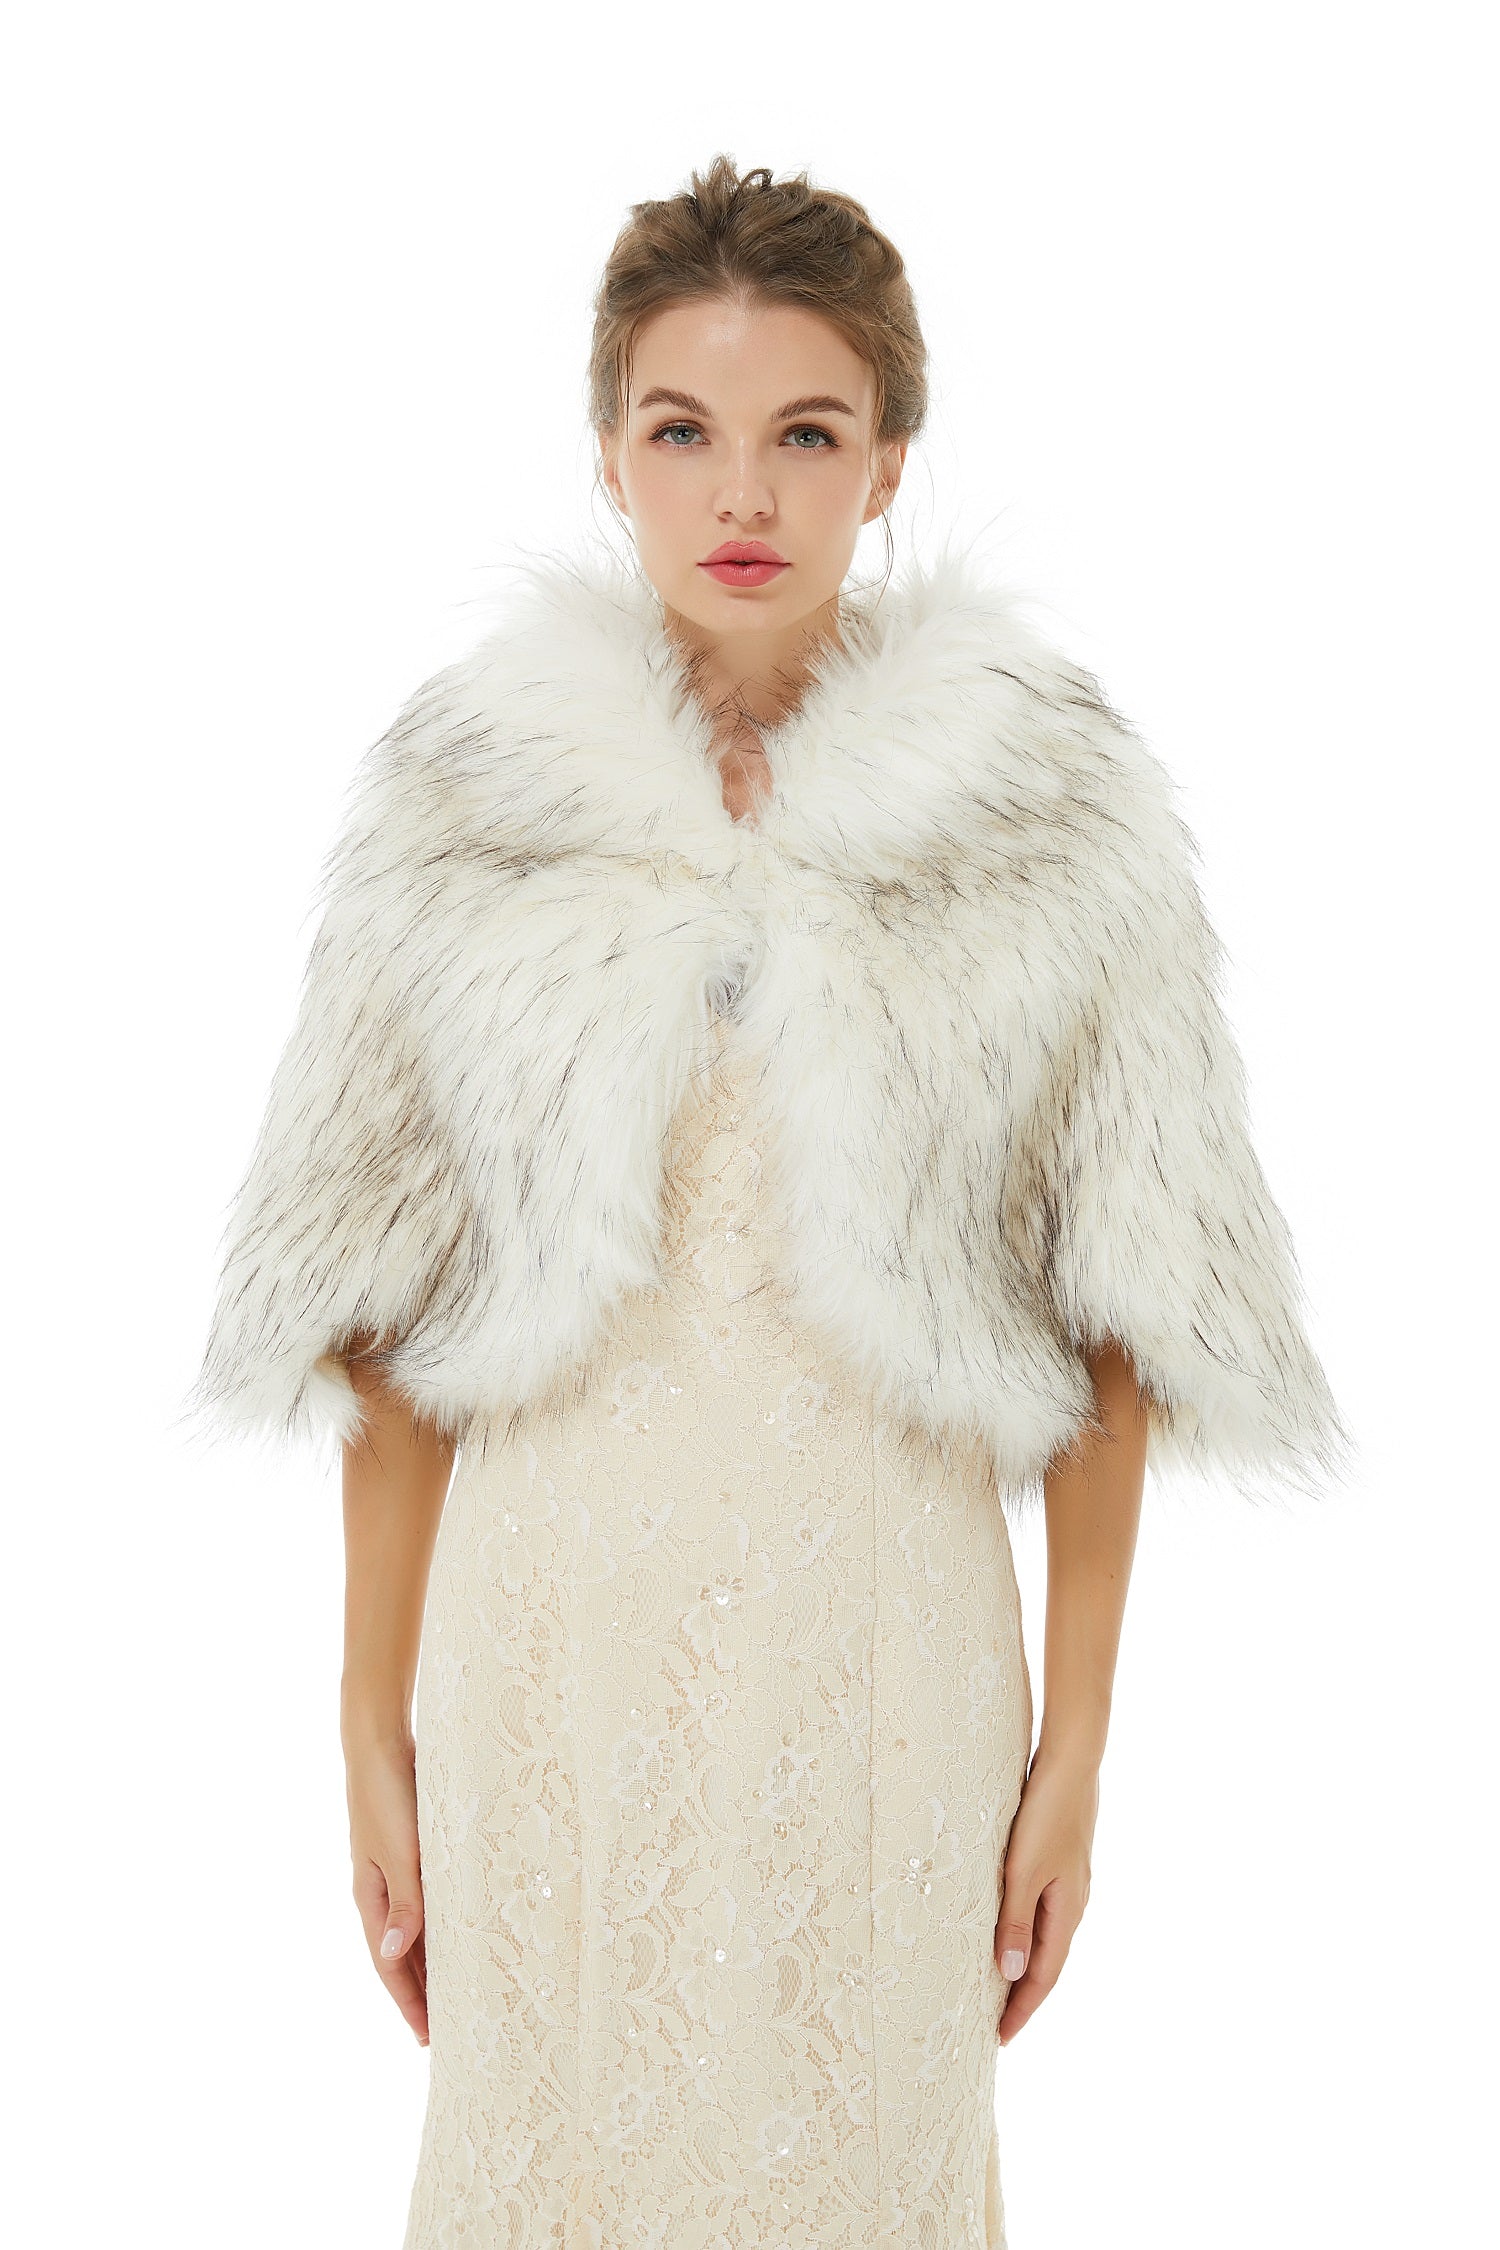 Luluslly White Winter Faux Fur Wedding Wrap